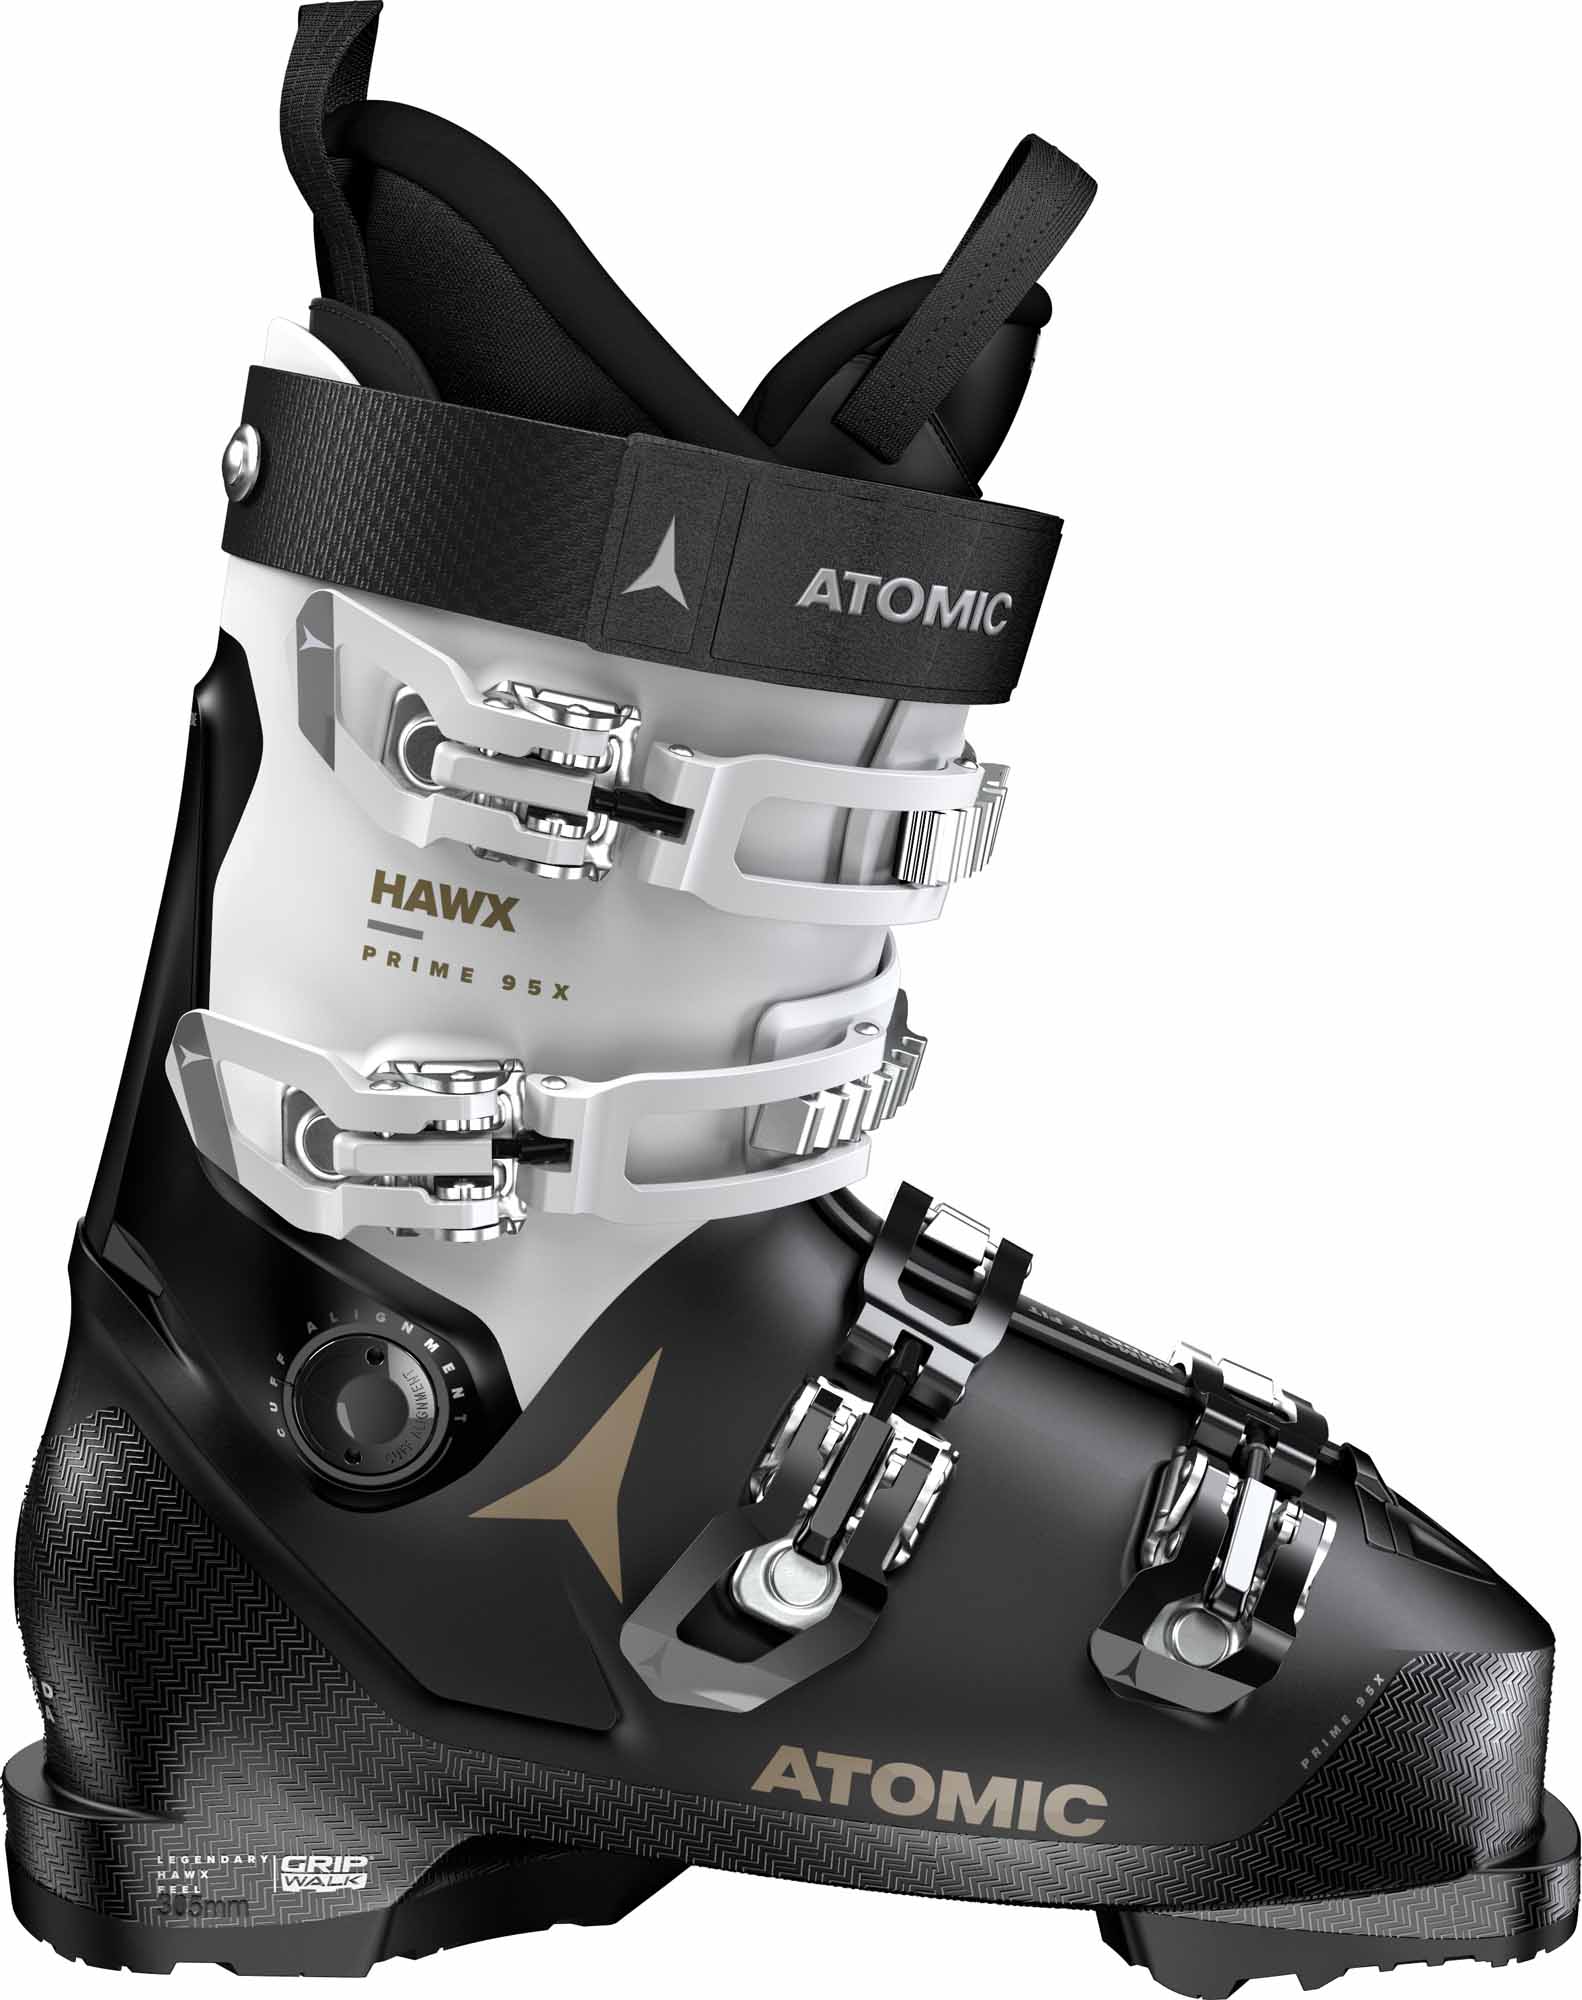 ATOMIC Hawx Prime 95x W GW Black Skischoenen